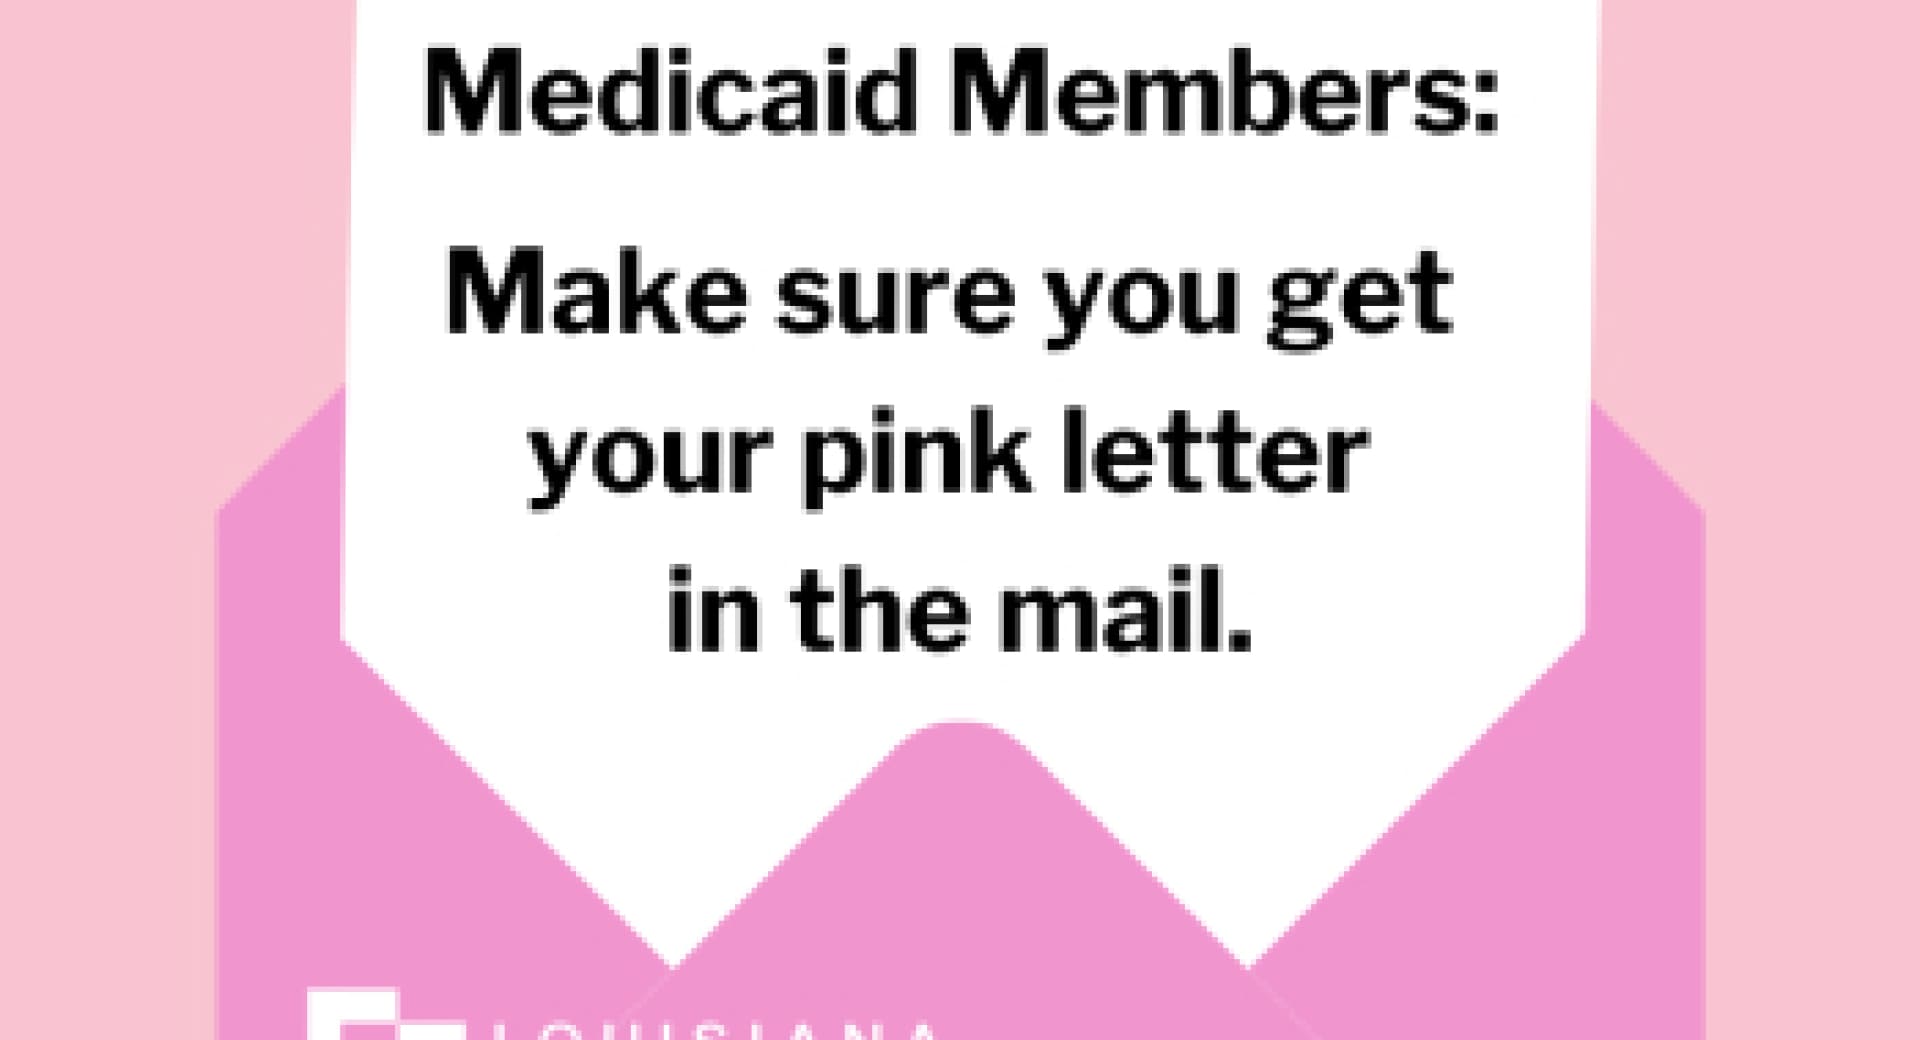 Medicaid Members